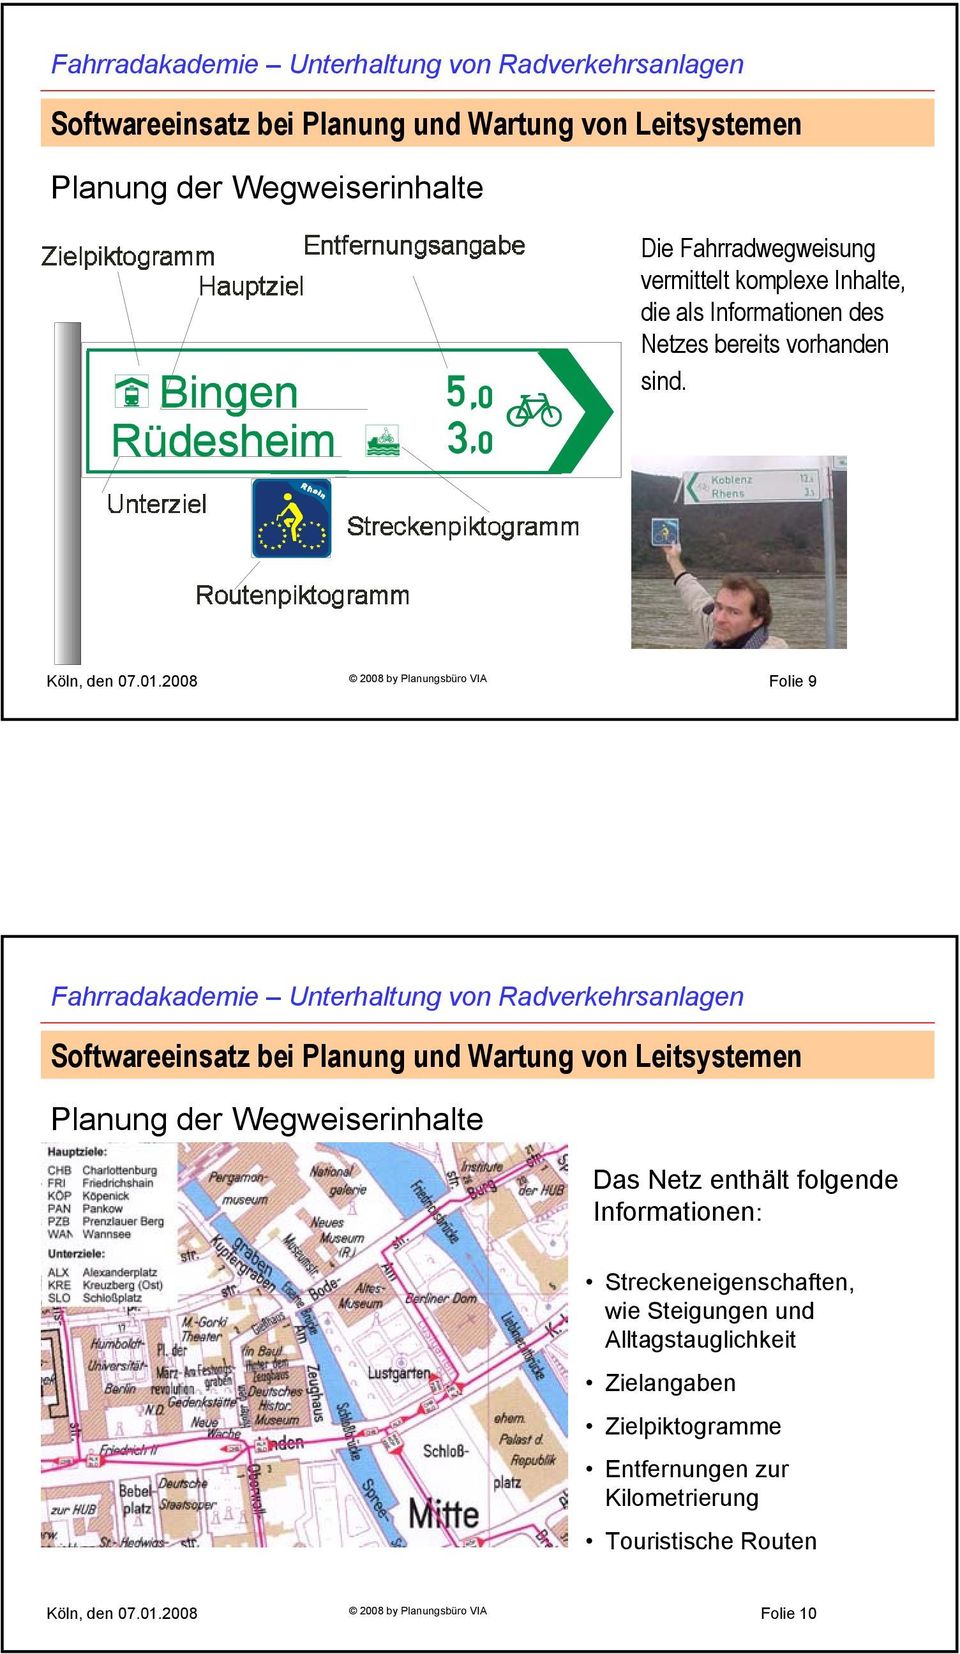 2008 2008 by Planungsbüro VIA Folie 9 Planung der Wegweiserinhalte Das Netz enthält folgende Informationen: